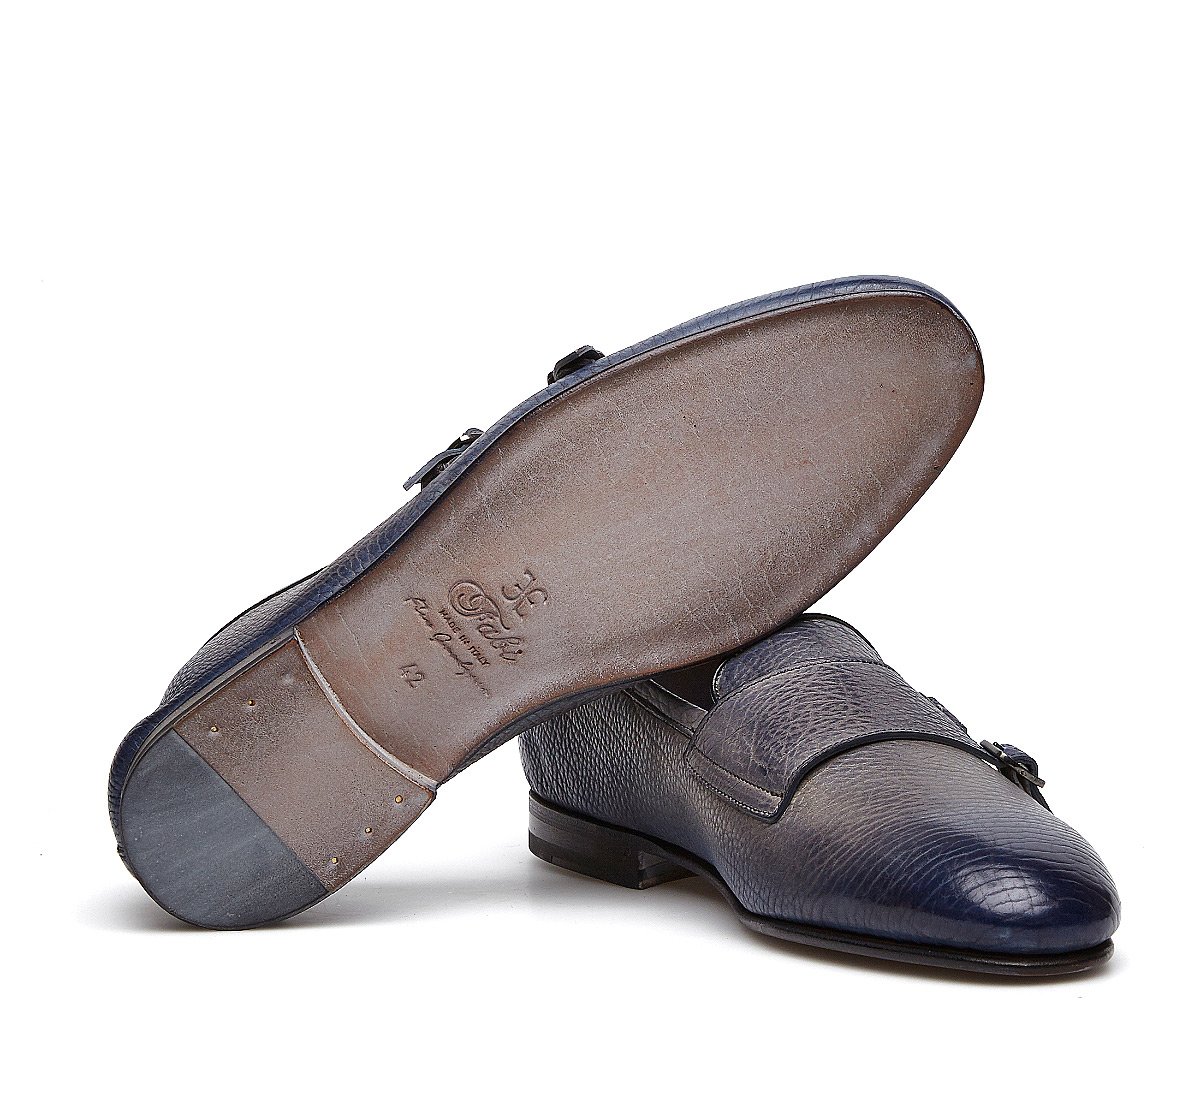 Fabi Flex Goodyear double monk-strap shoes in exquisite hand-buffed calfskin